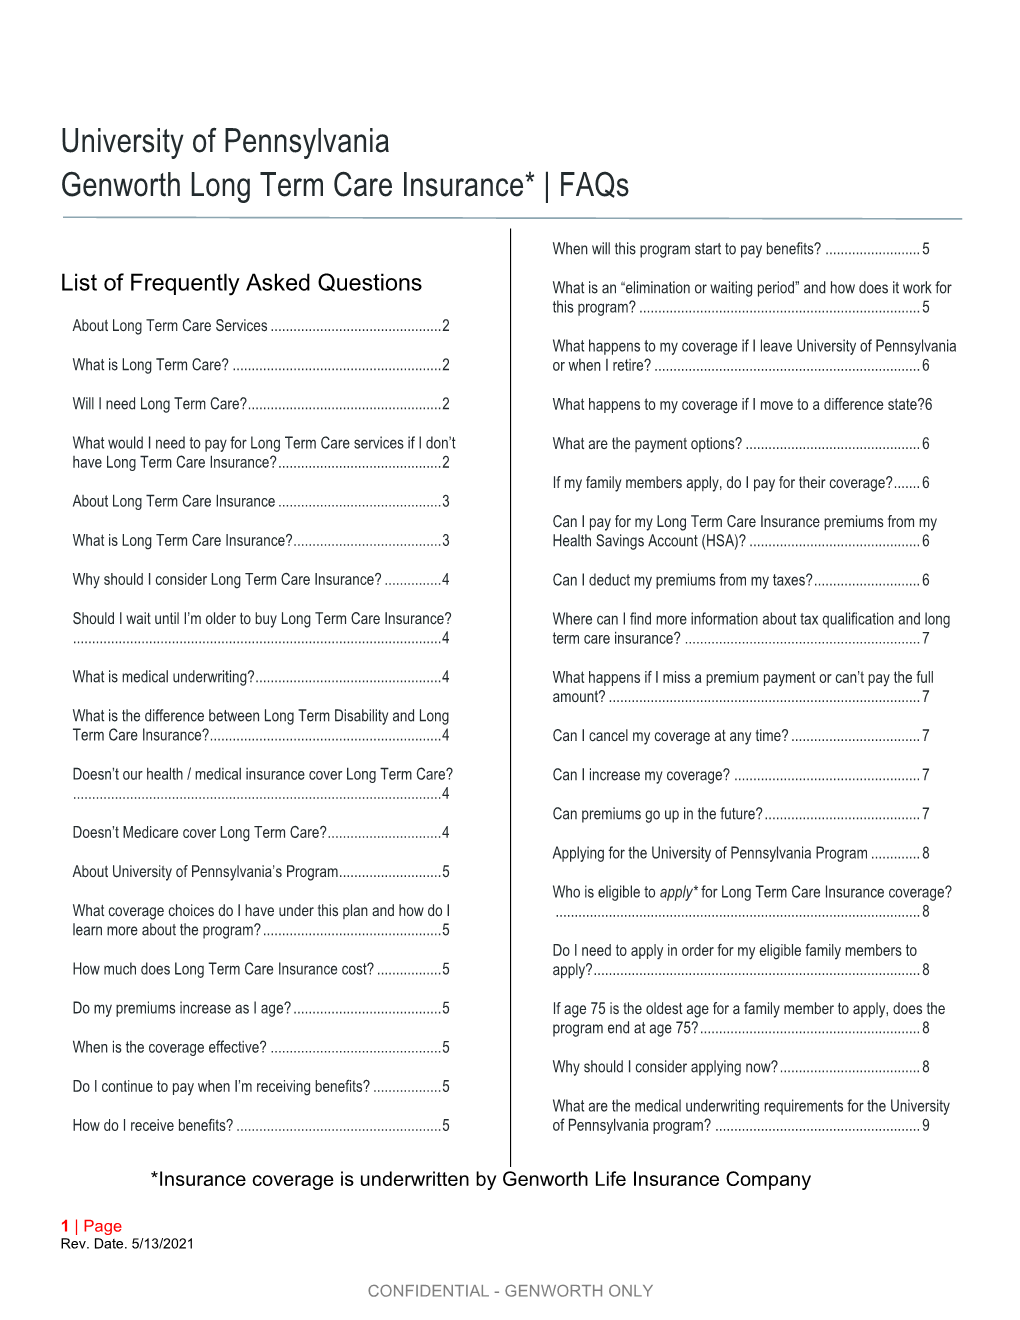 University of Pennsylvania Genworth Long Term Care Insurance* | Faqs